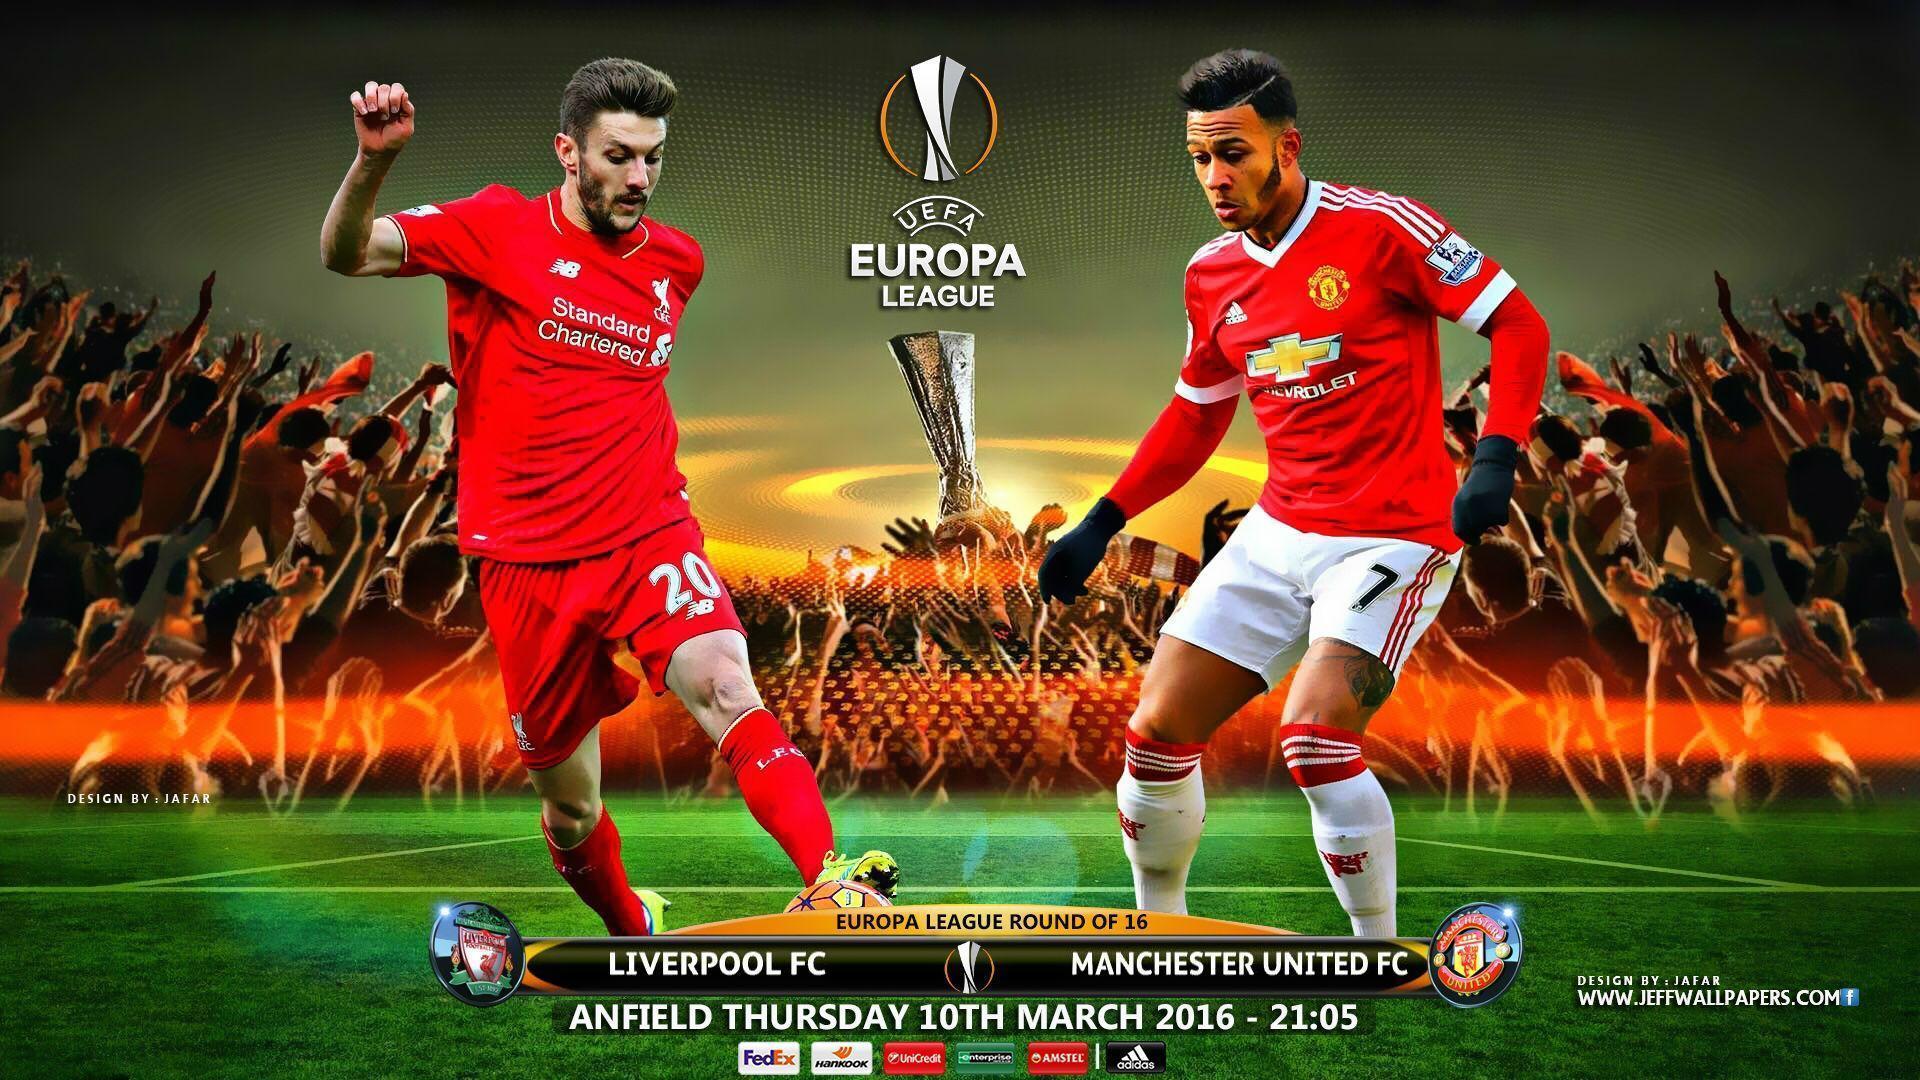 Europa League 2016 Liverpool FC Manchester United Wallpaper